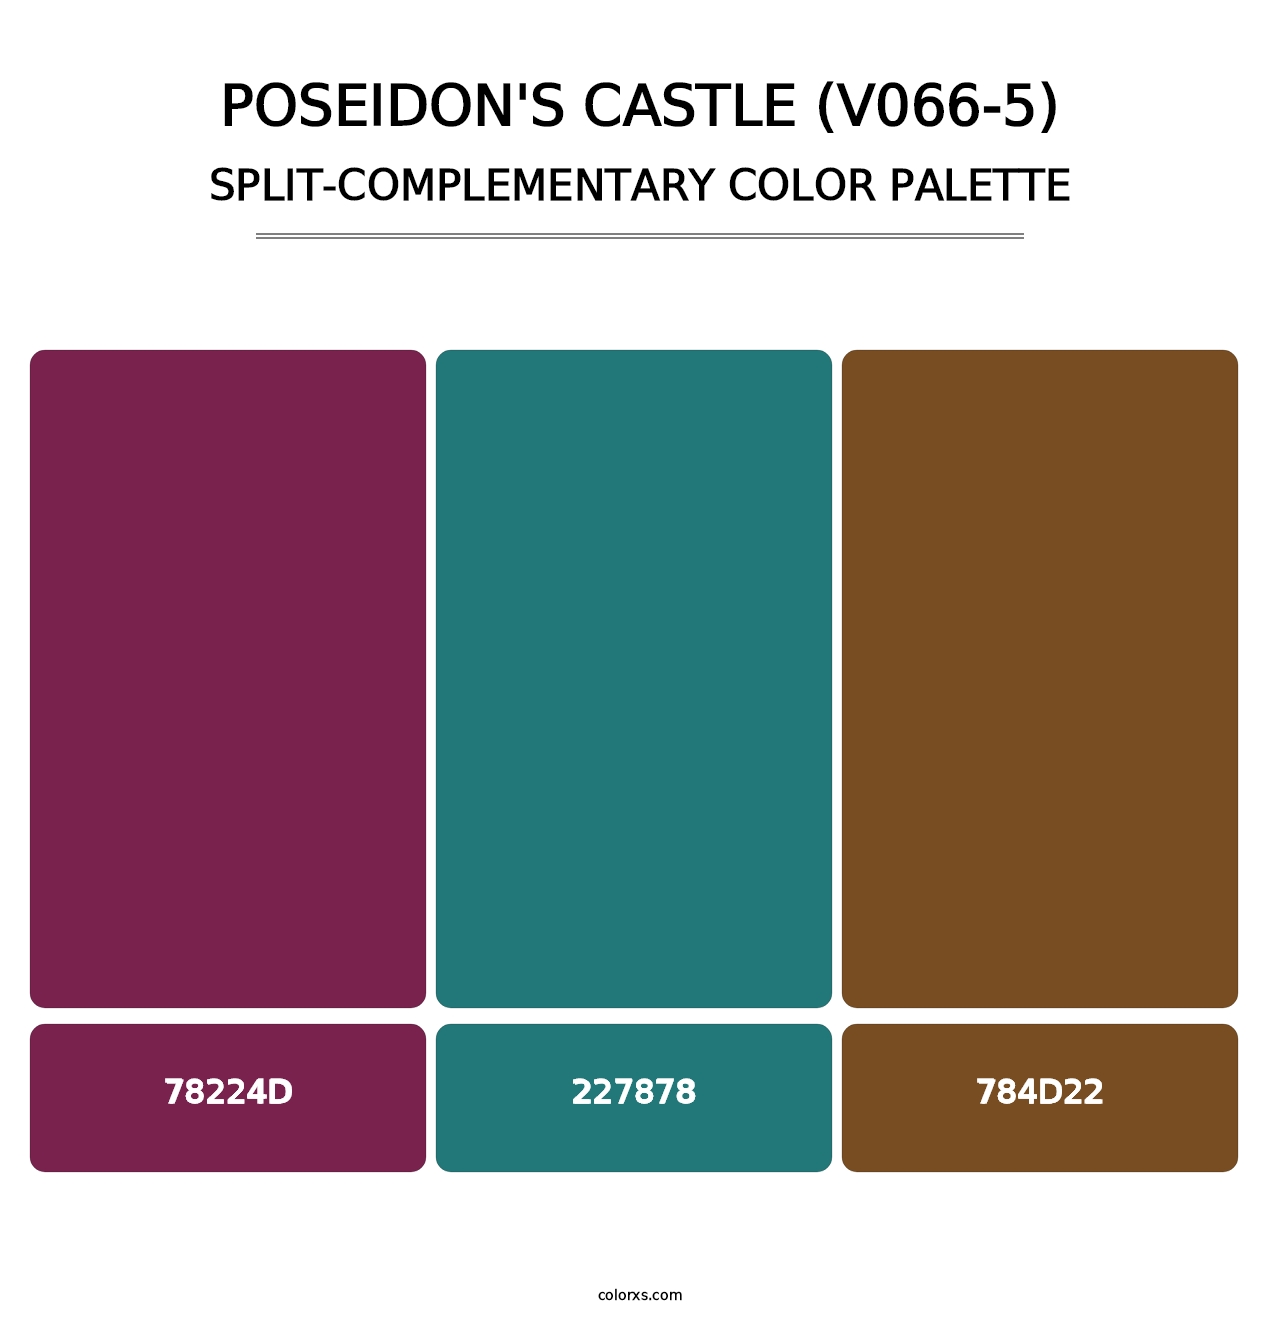 Poseidon's Castle (V066-5) - Split-Complementary Color Palette